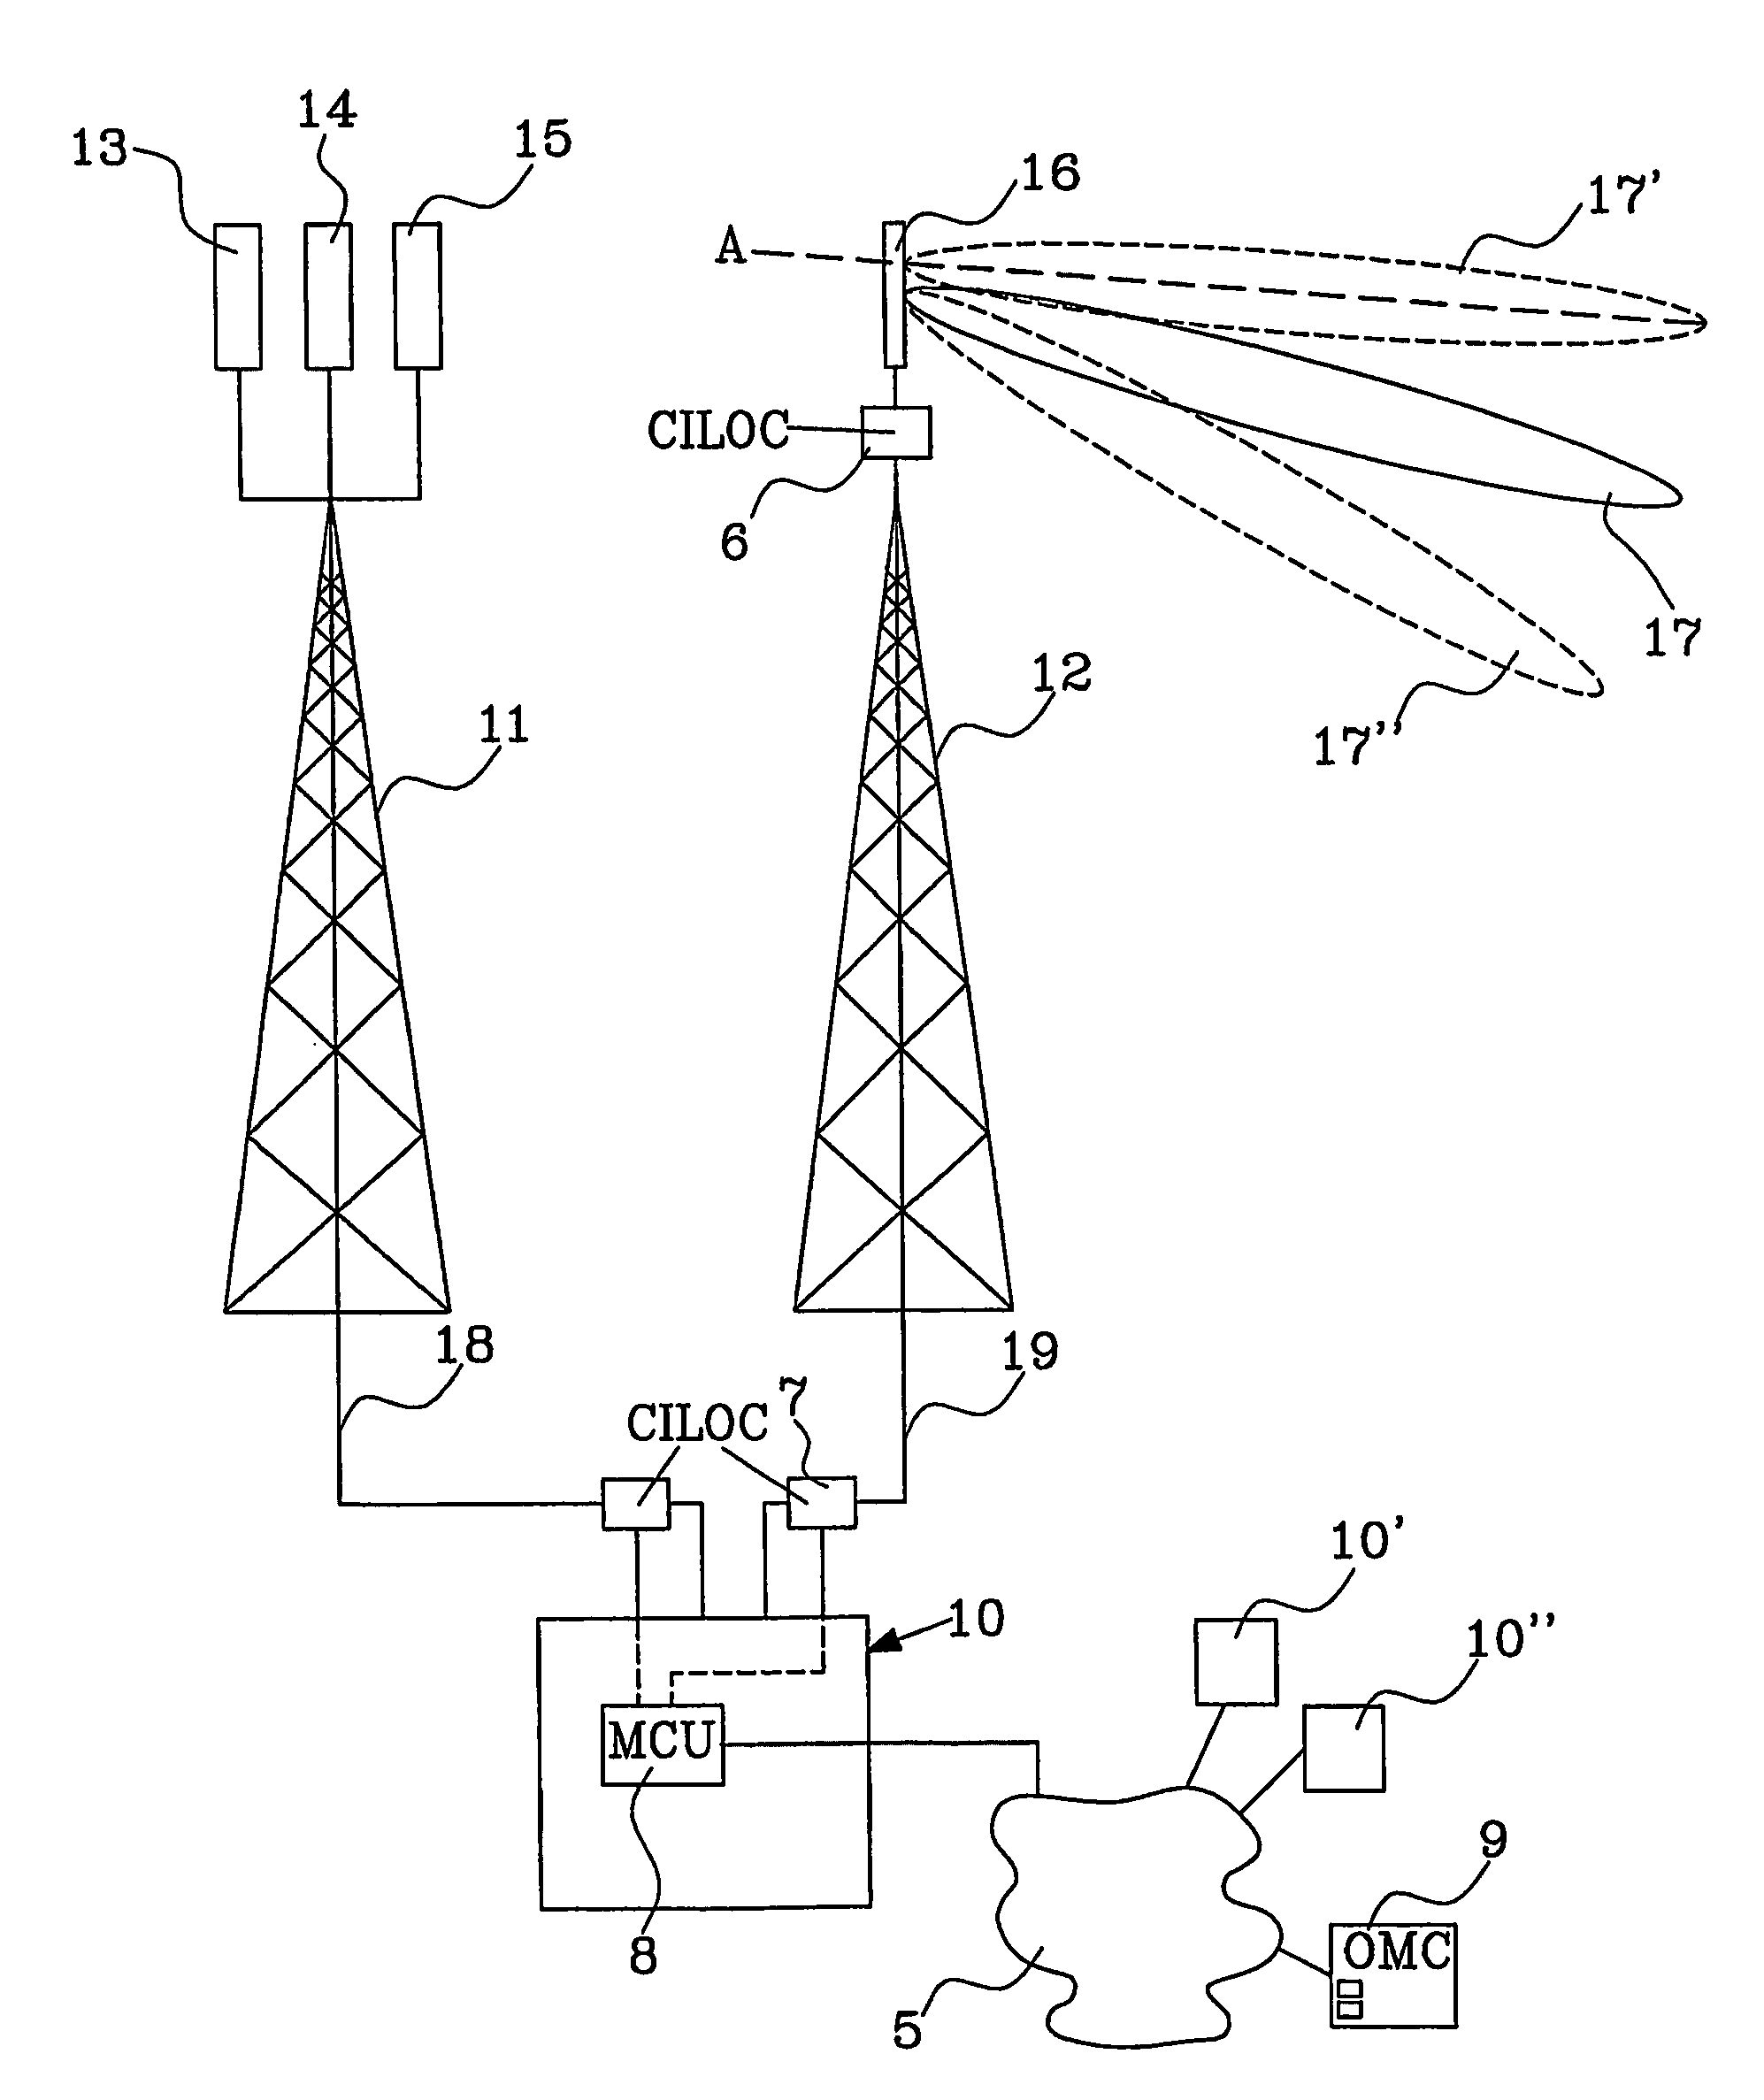 Antenna control system